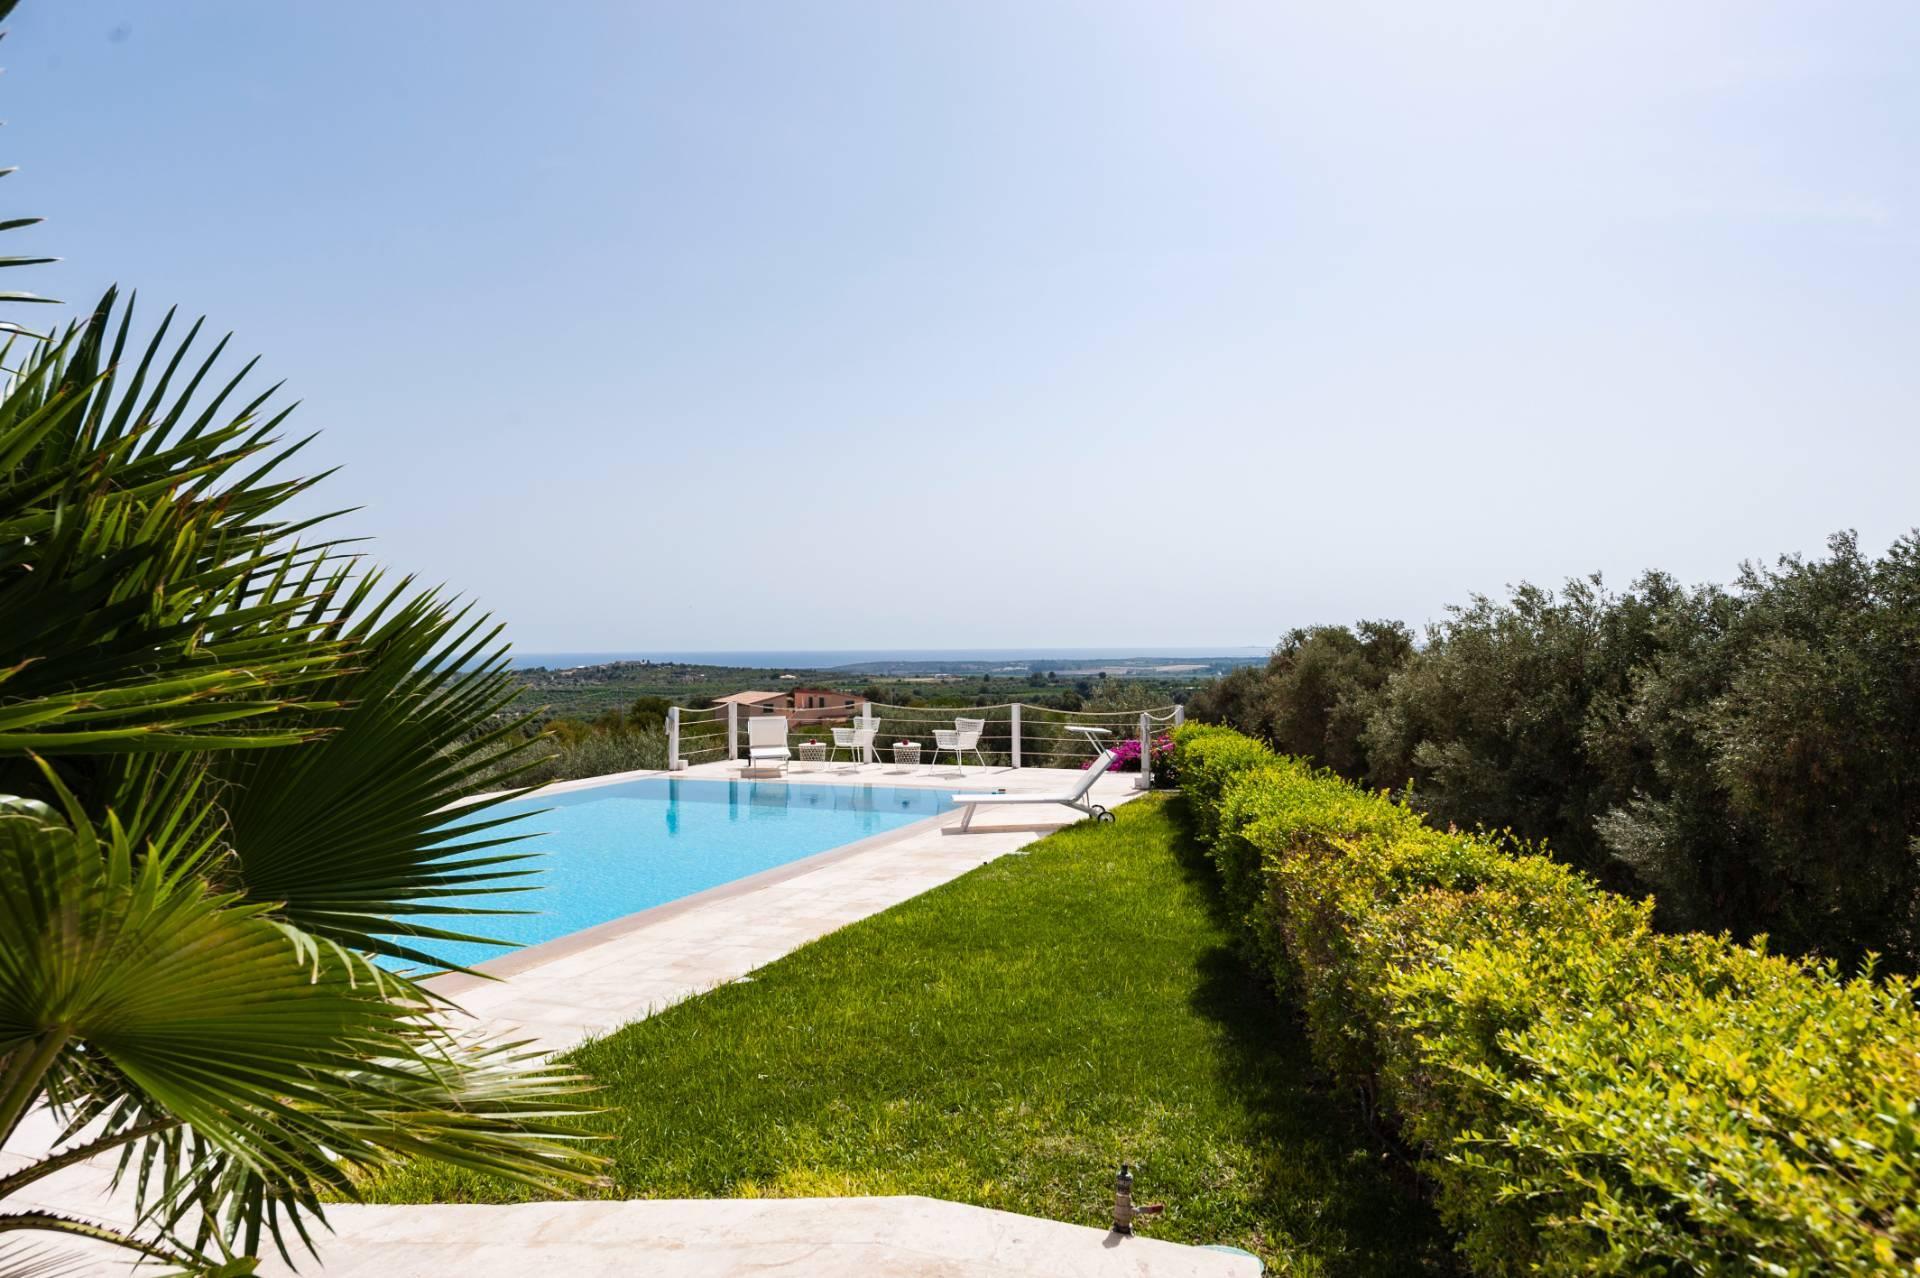 Prestigious villa with swimming pool overlooking the sea - 24